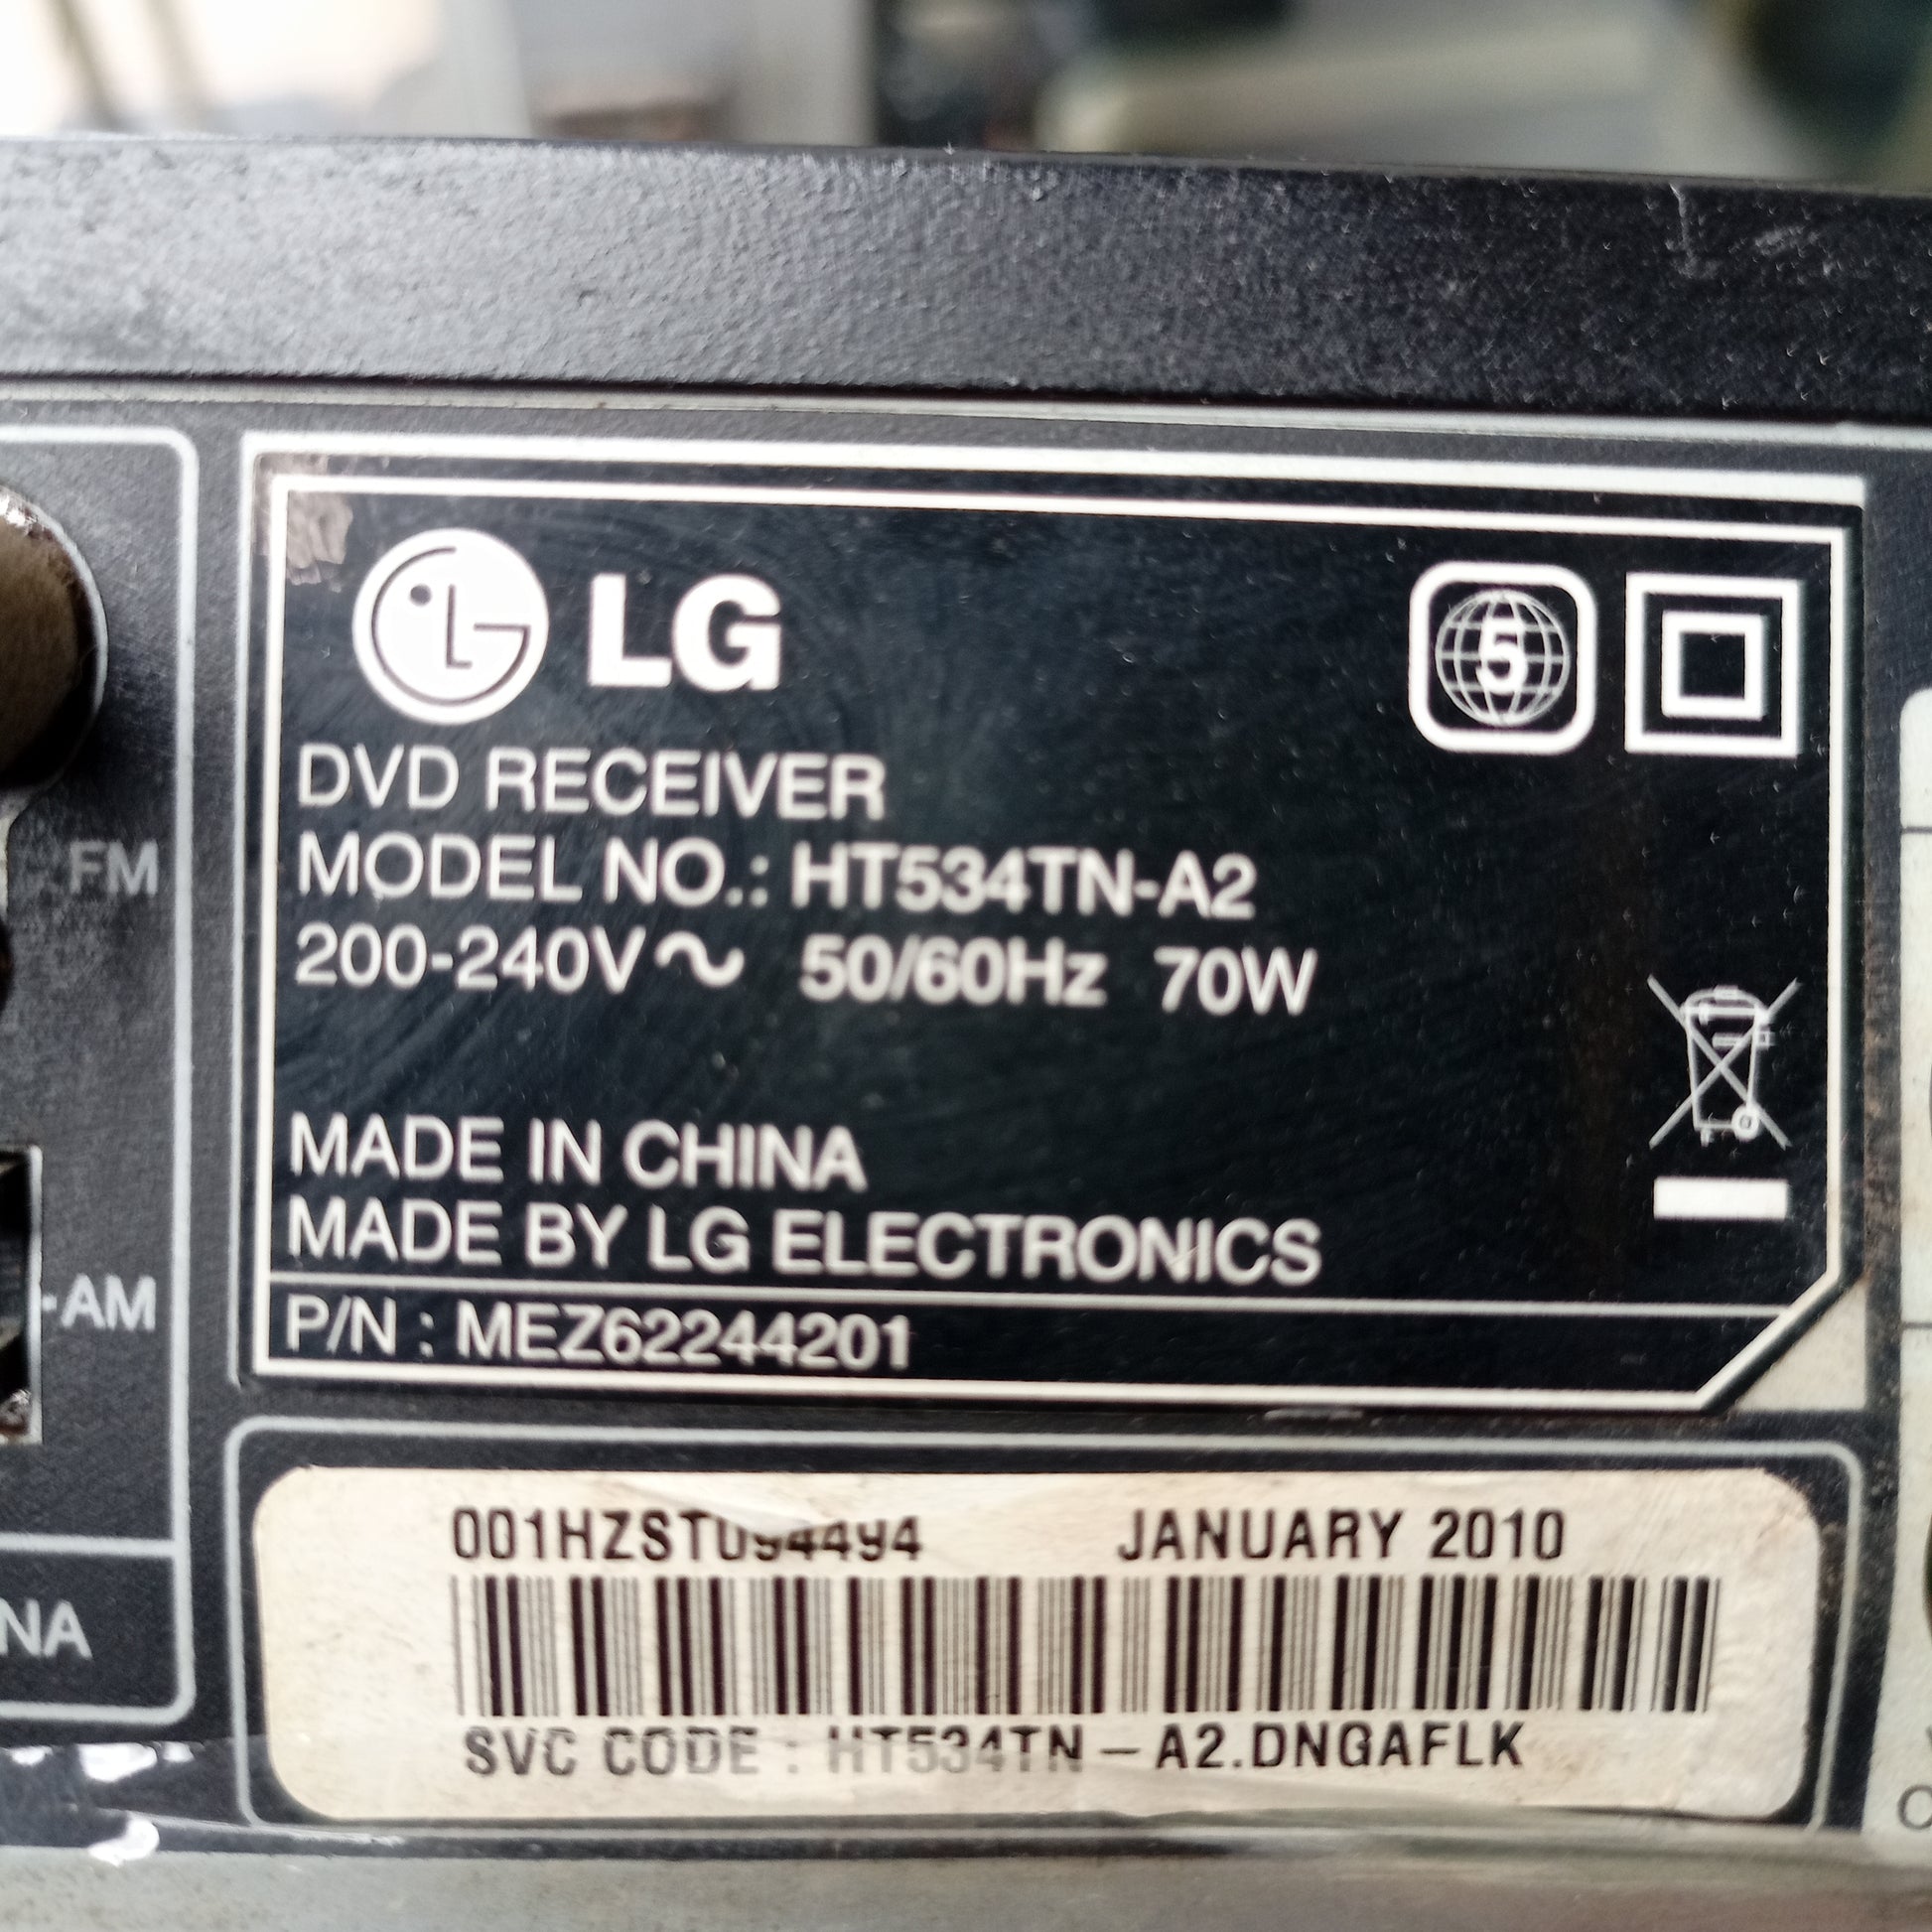 LG HT534TN-A2 1000 Watts DVD Home Theater Machine Head - Model number sticker